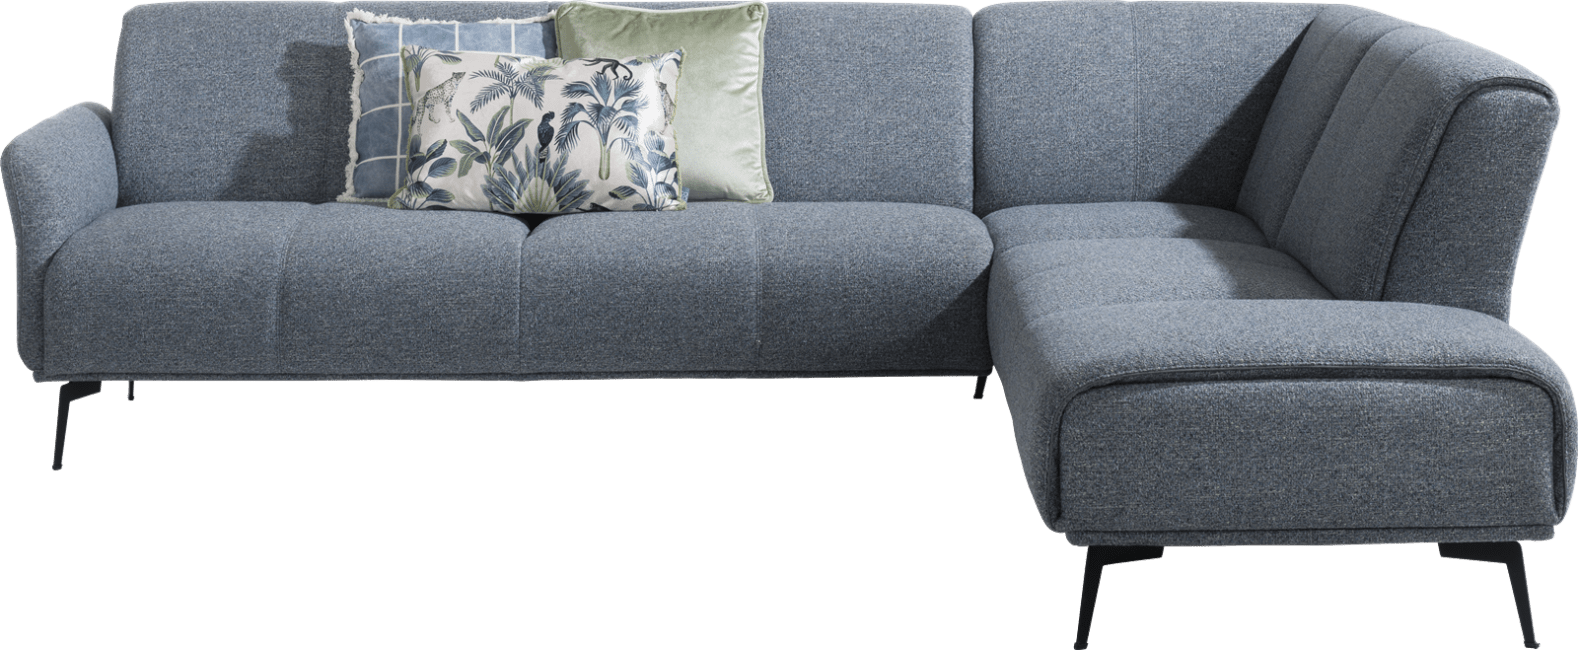 XOOON - Manarola - Design minimaliste - Canapes - 2-places accoudoir gauche